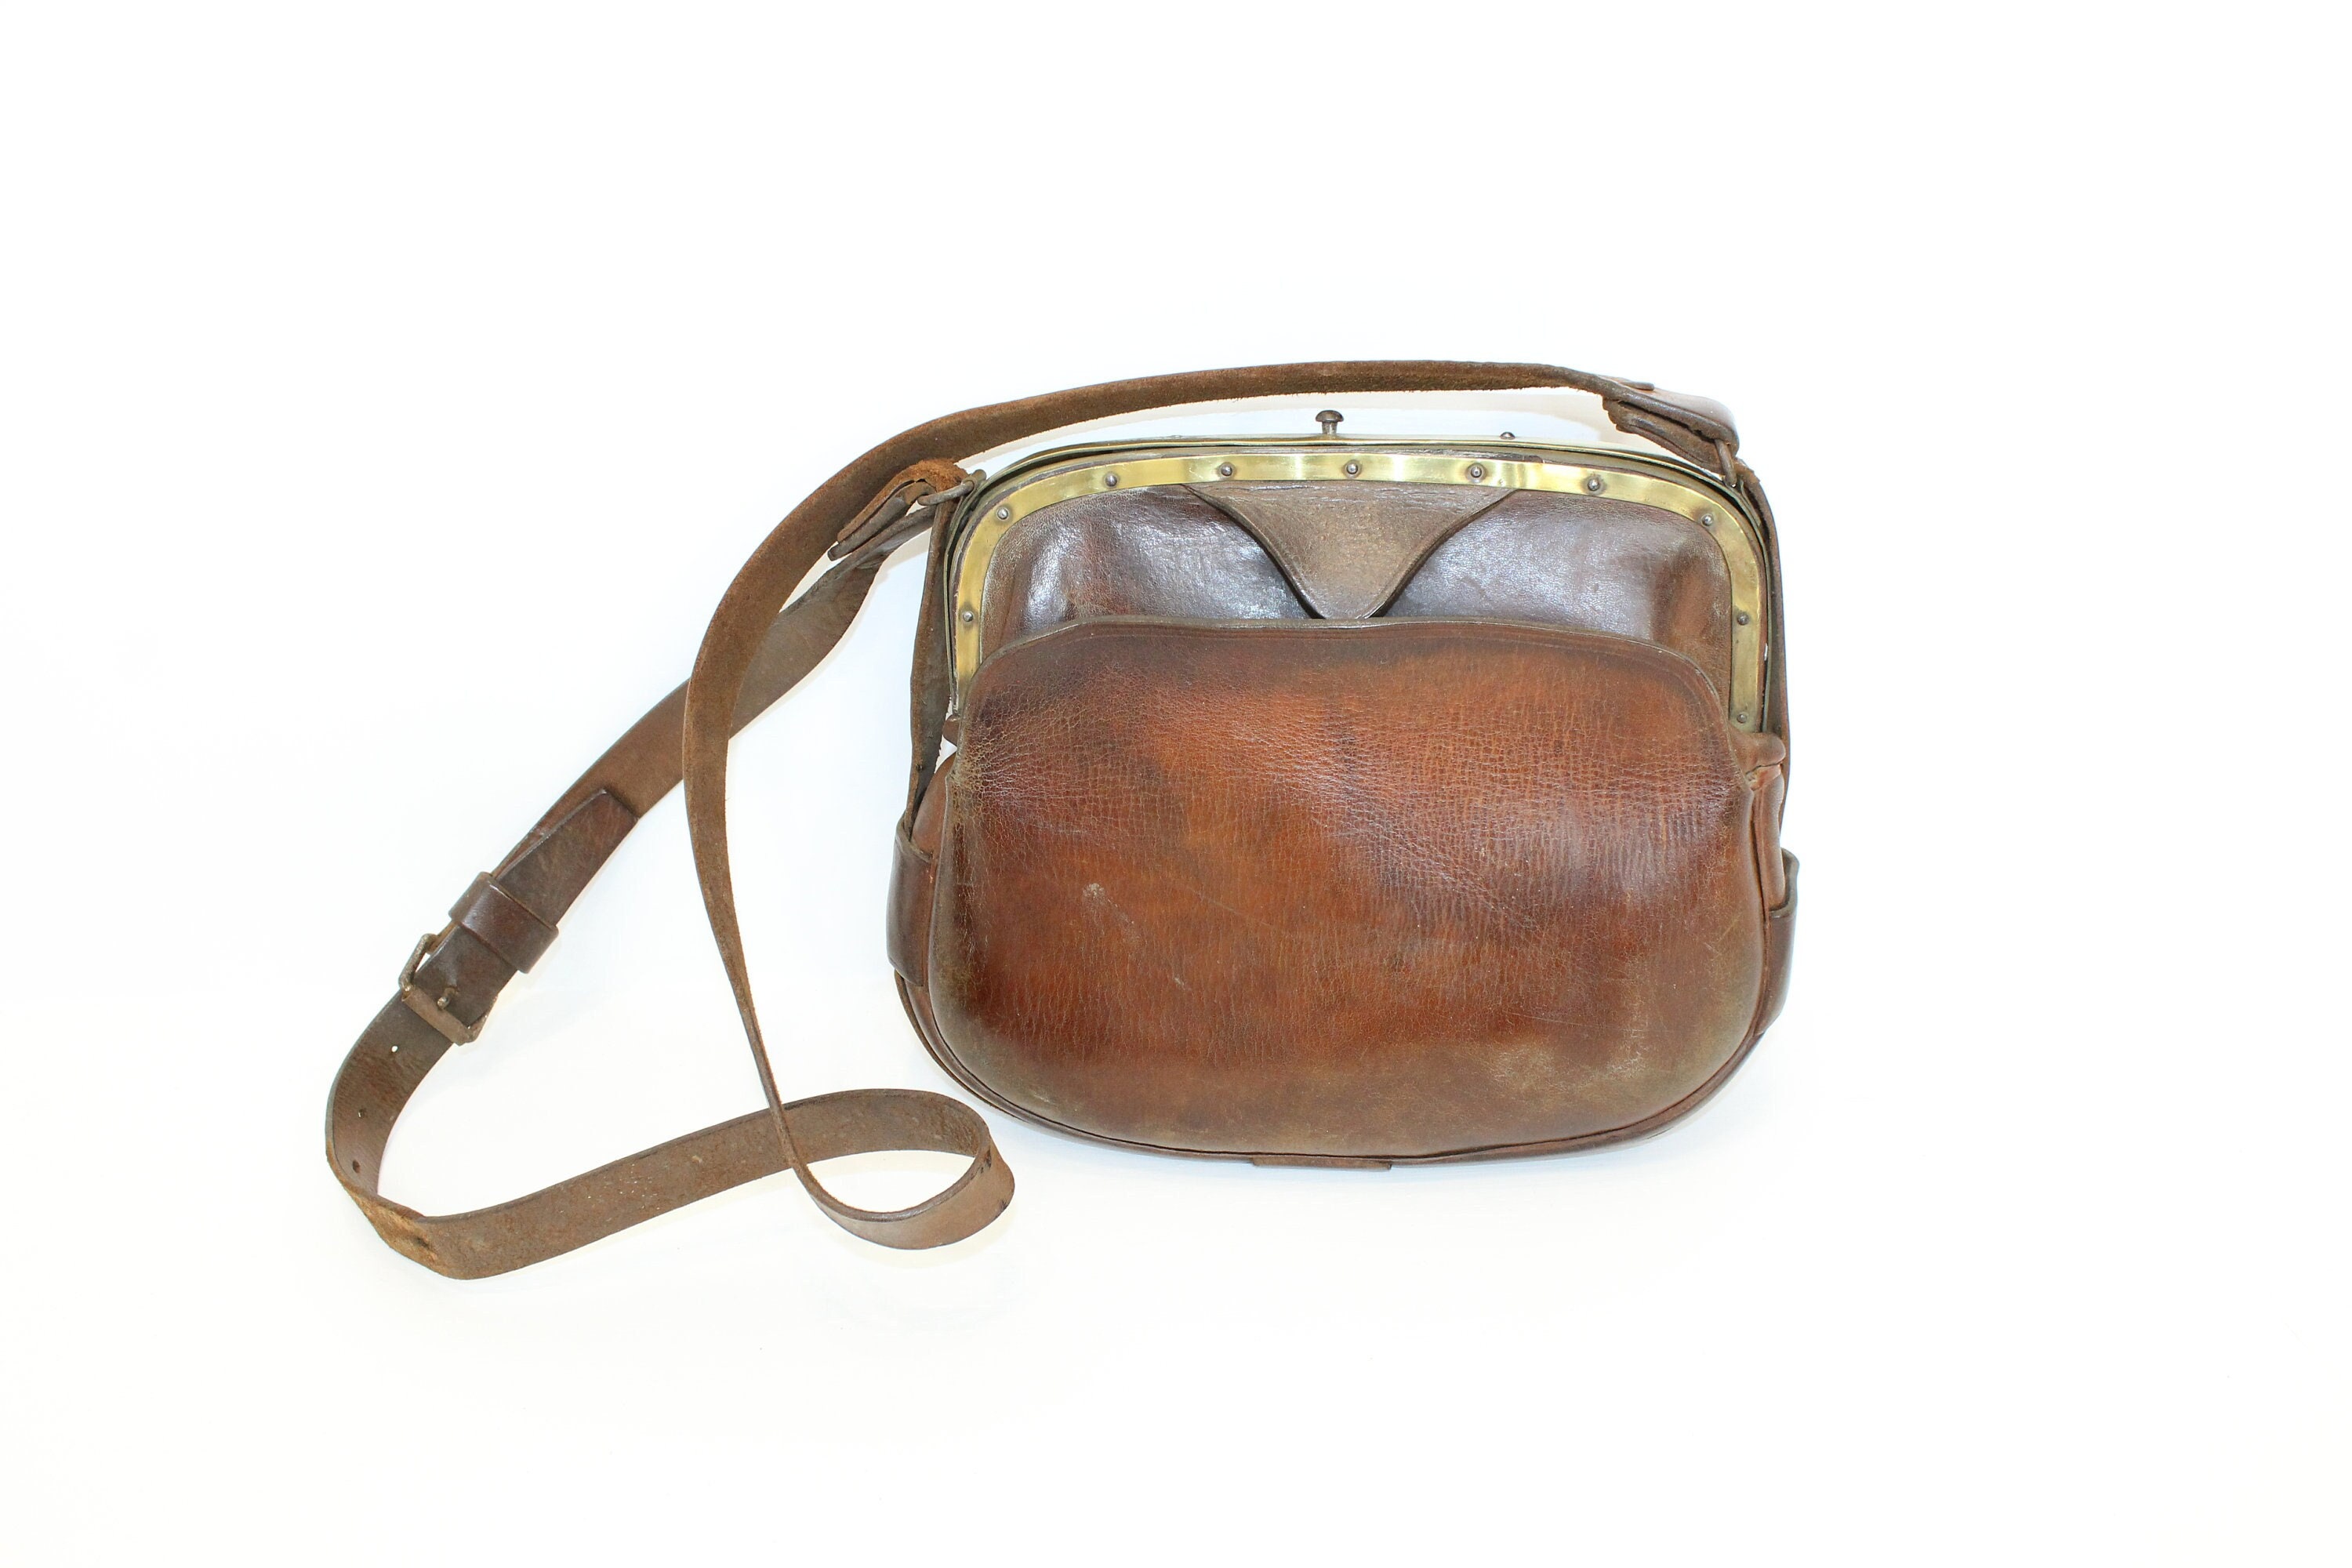 Stunning vintage French 1930's handbag rare shape perfect